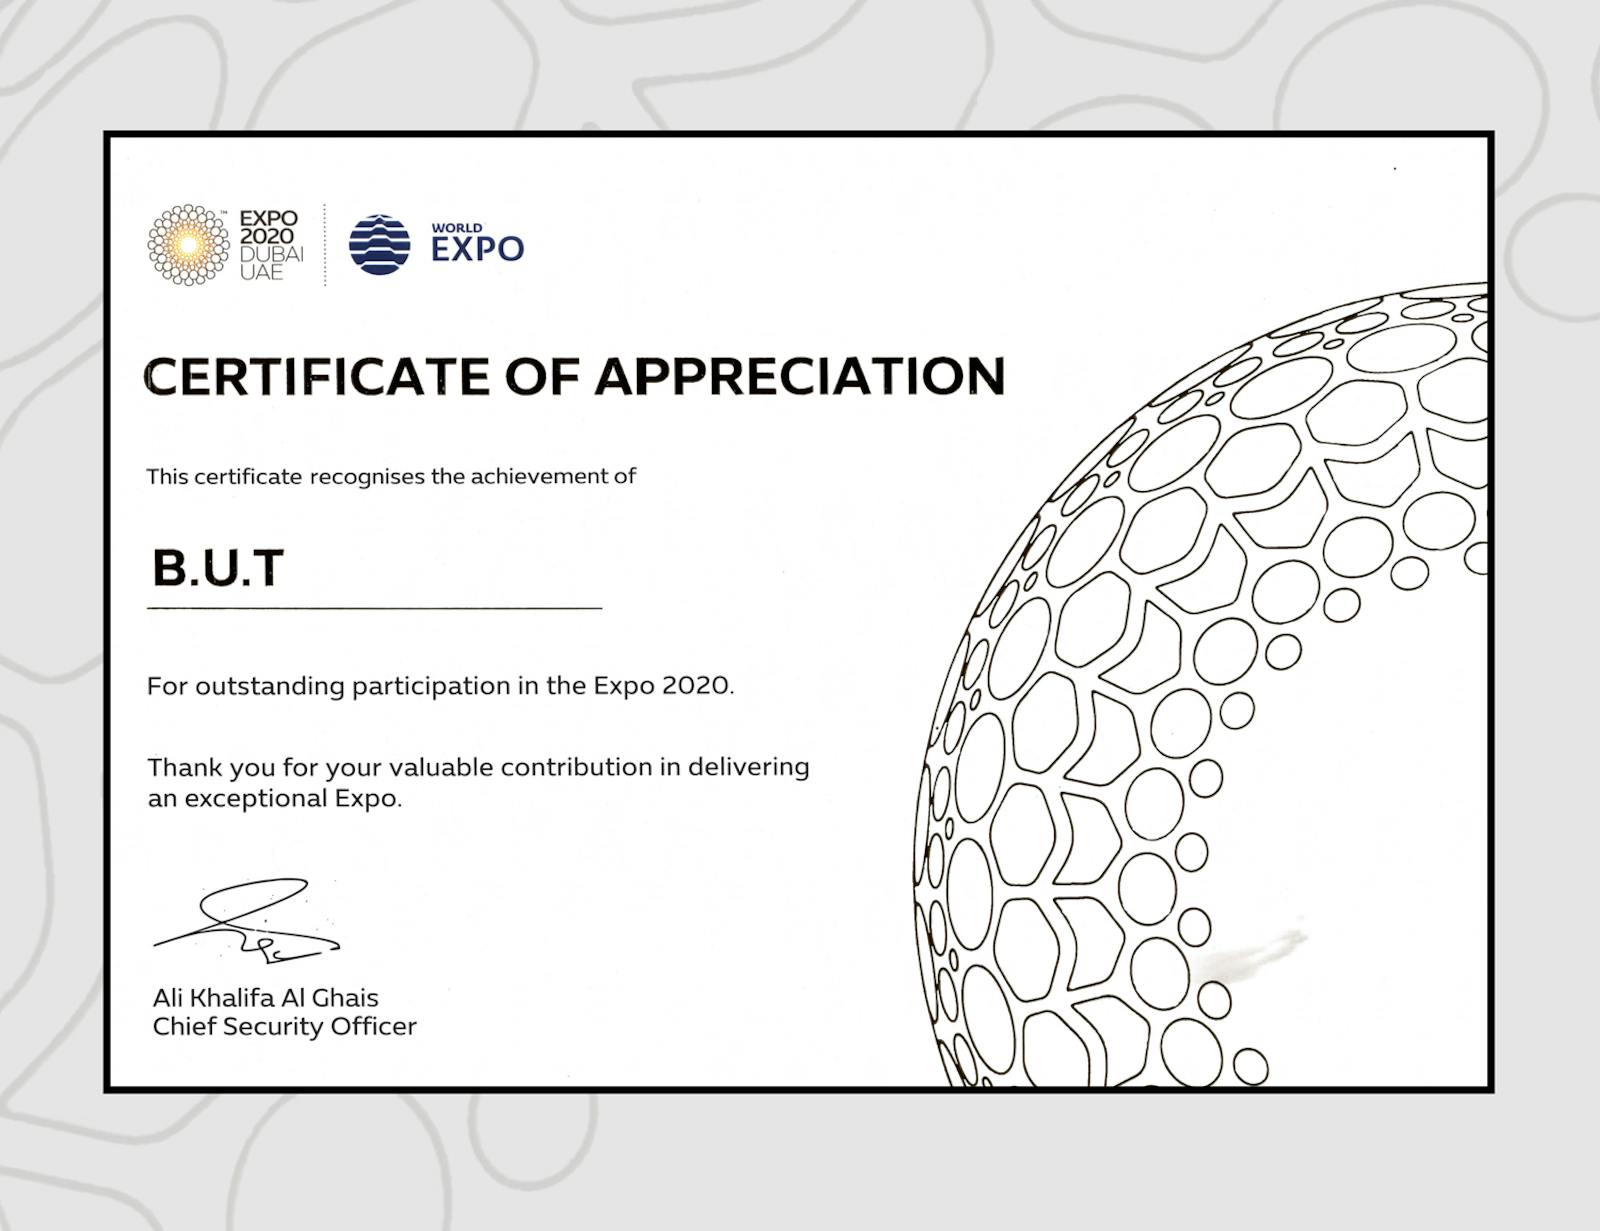 Expo2020 certificate appreciates BUT